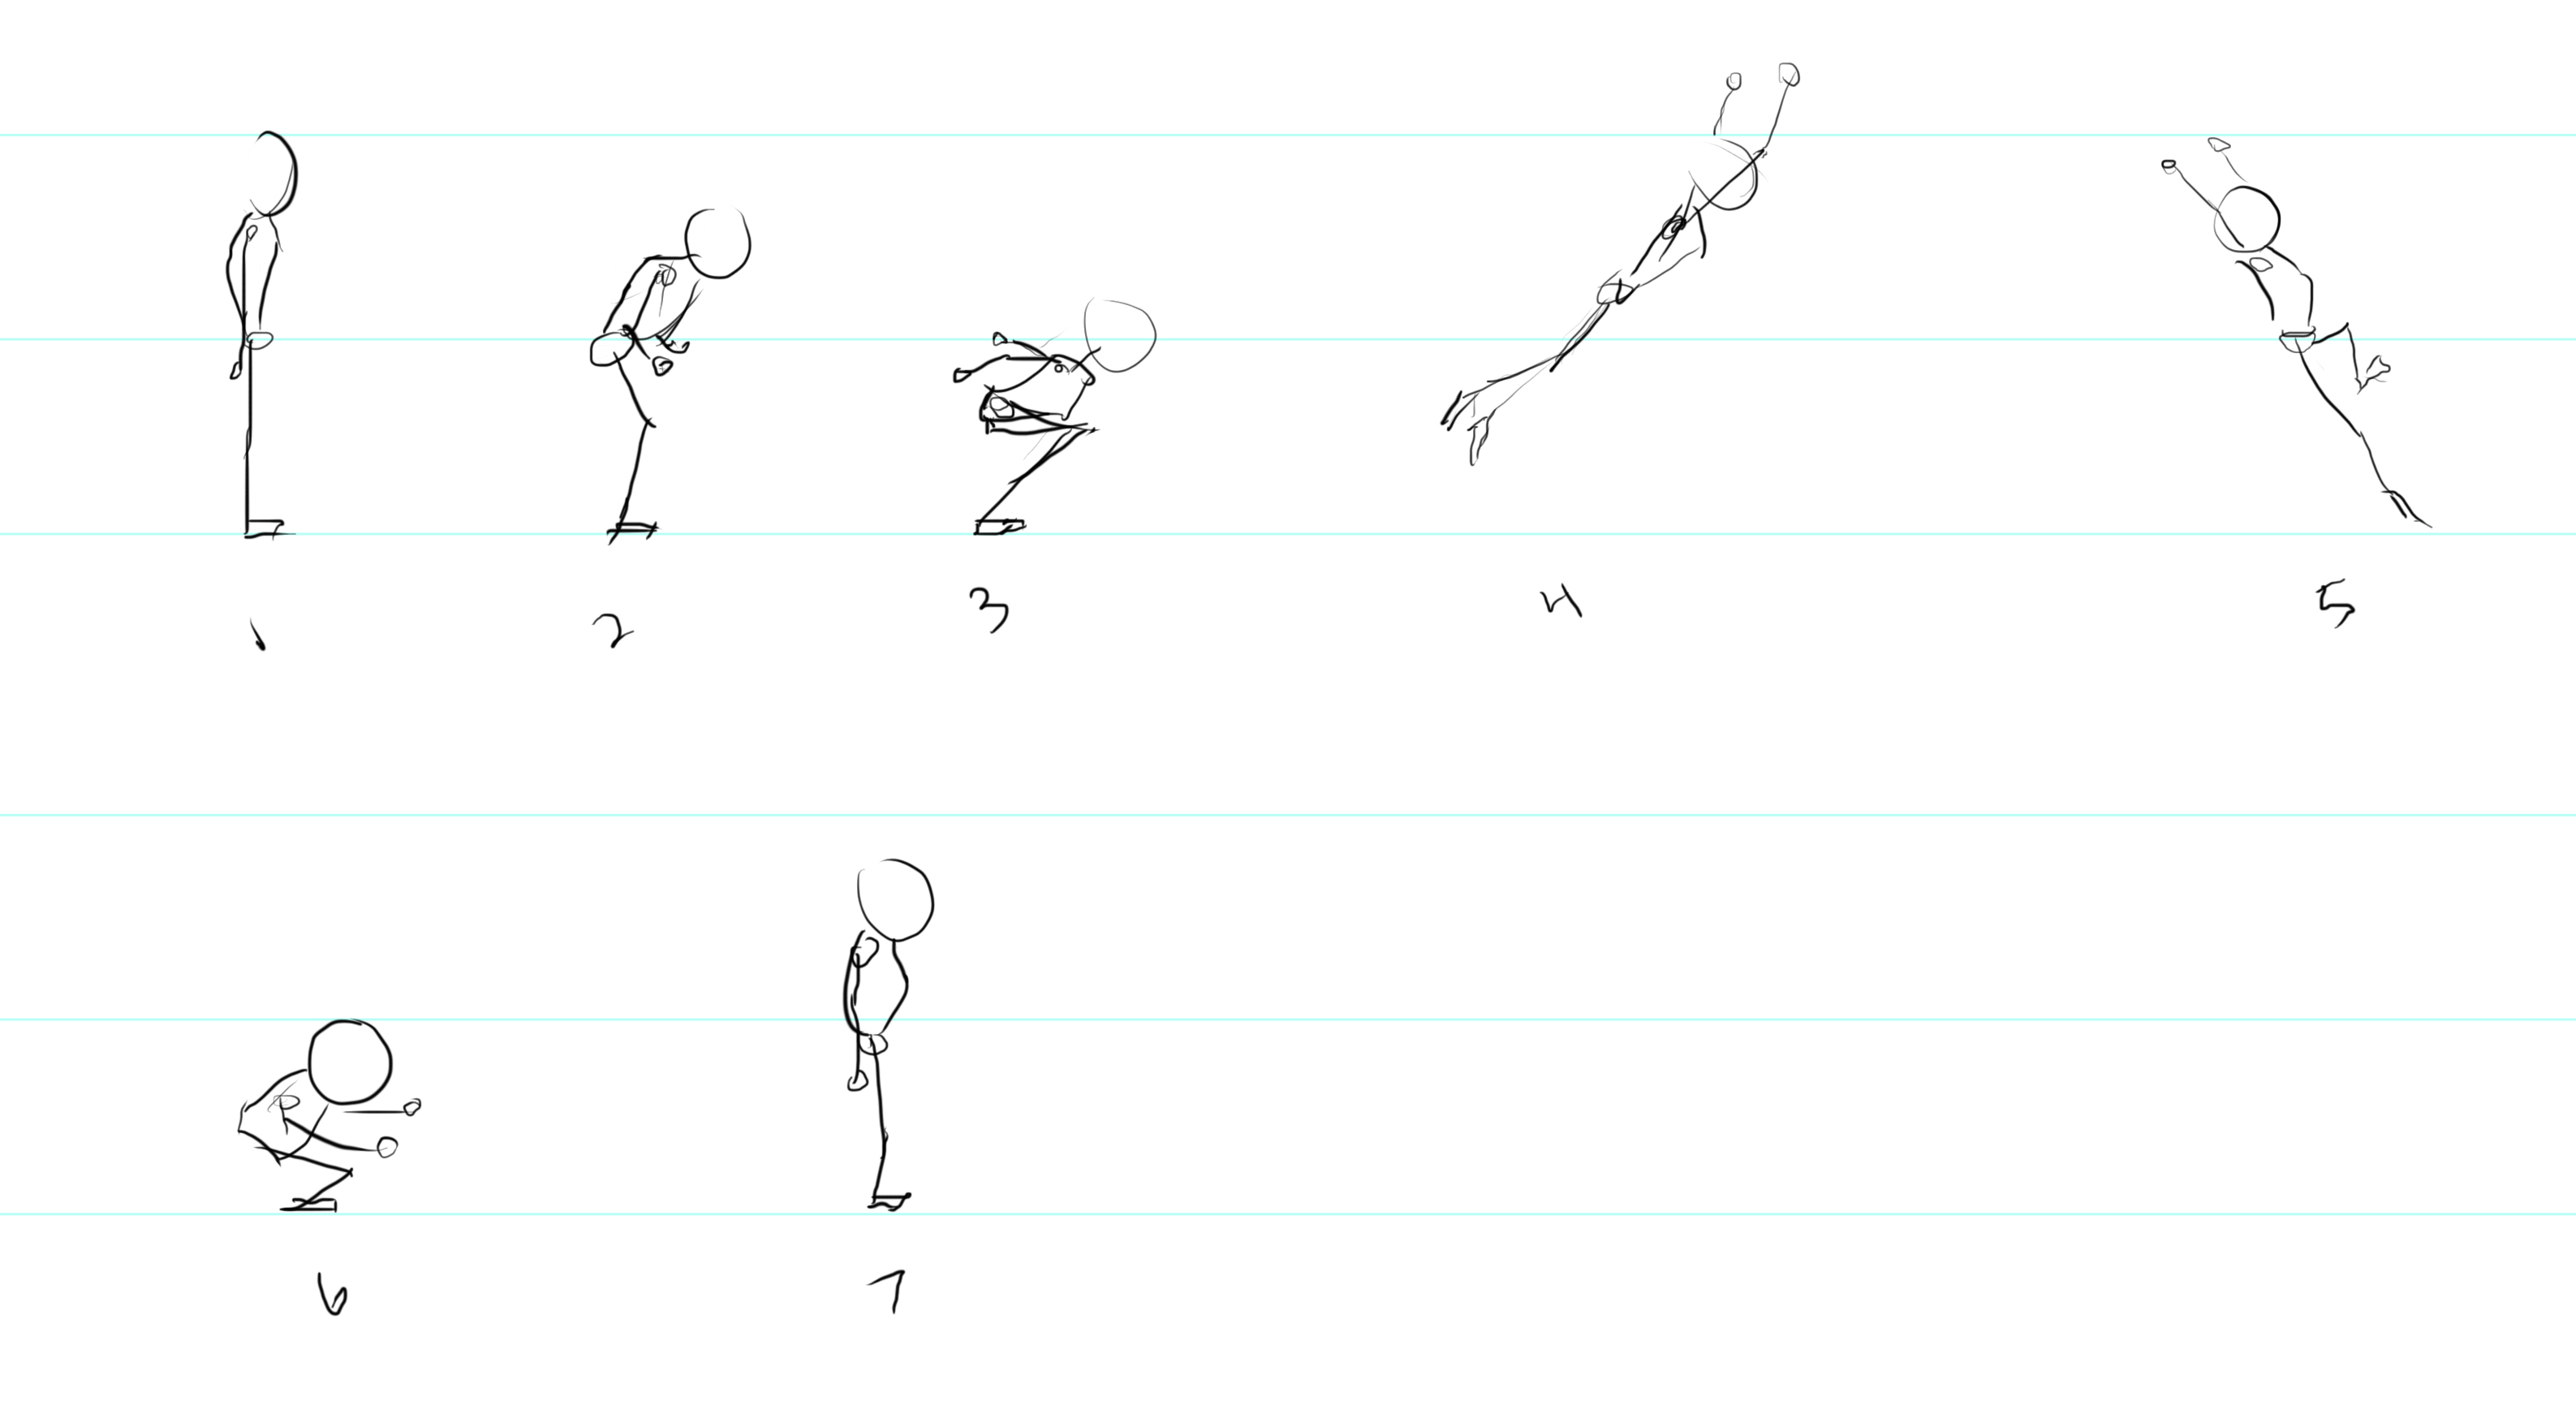 Jumping Poses - Basketball jumping pose | PoseMy.Art